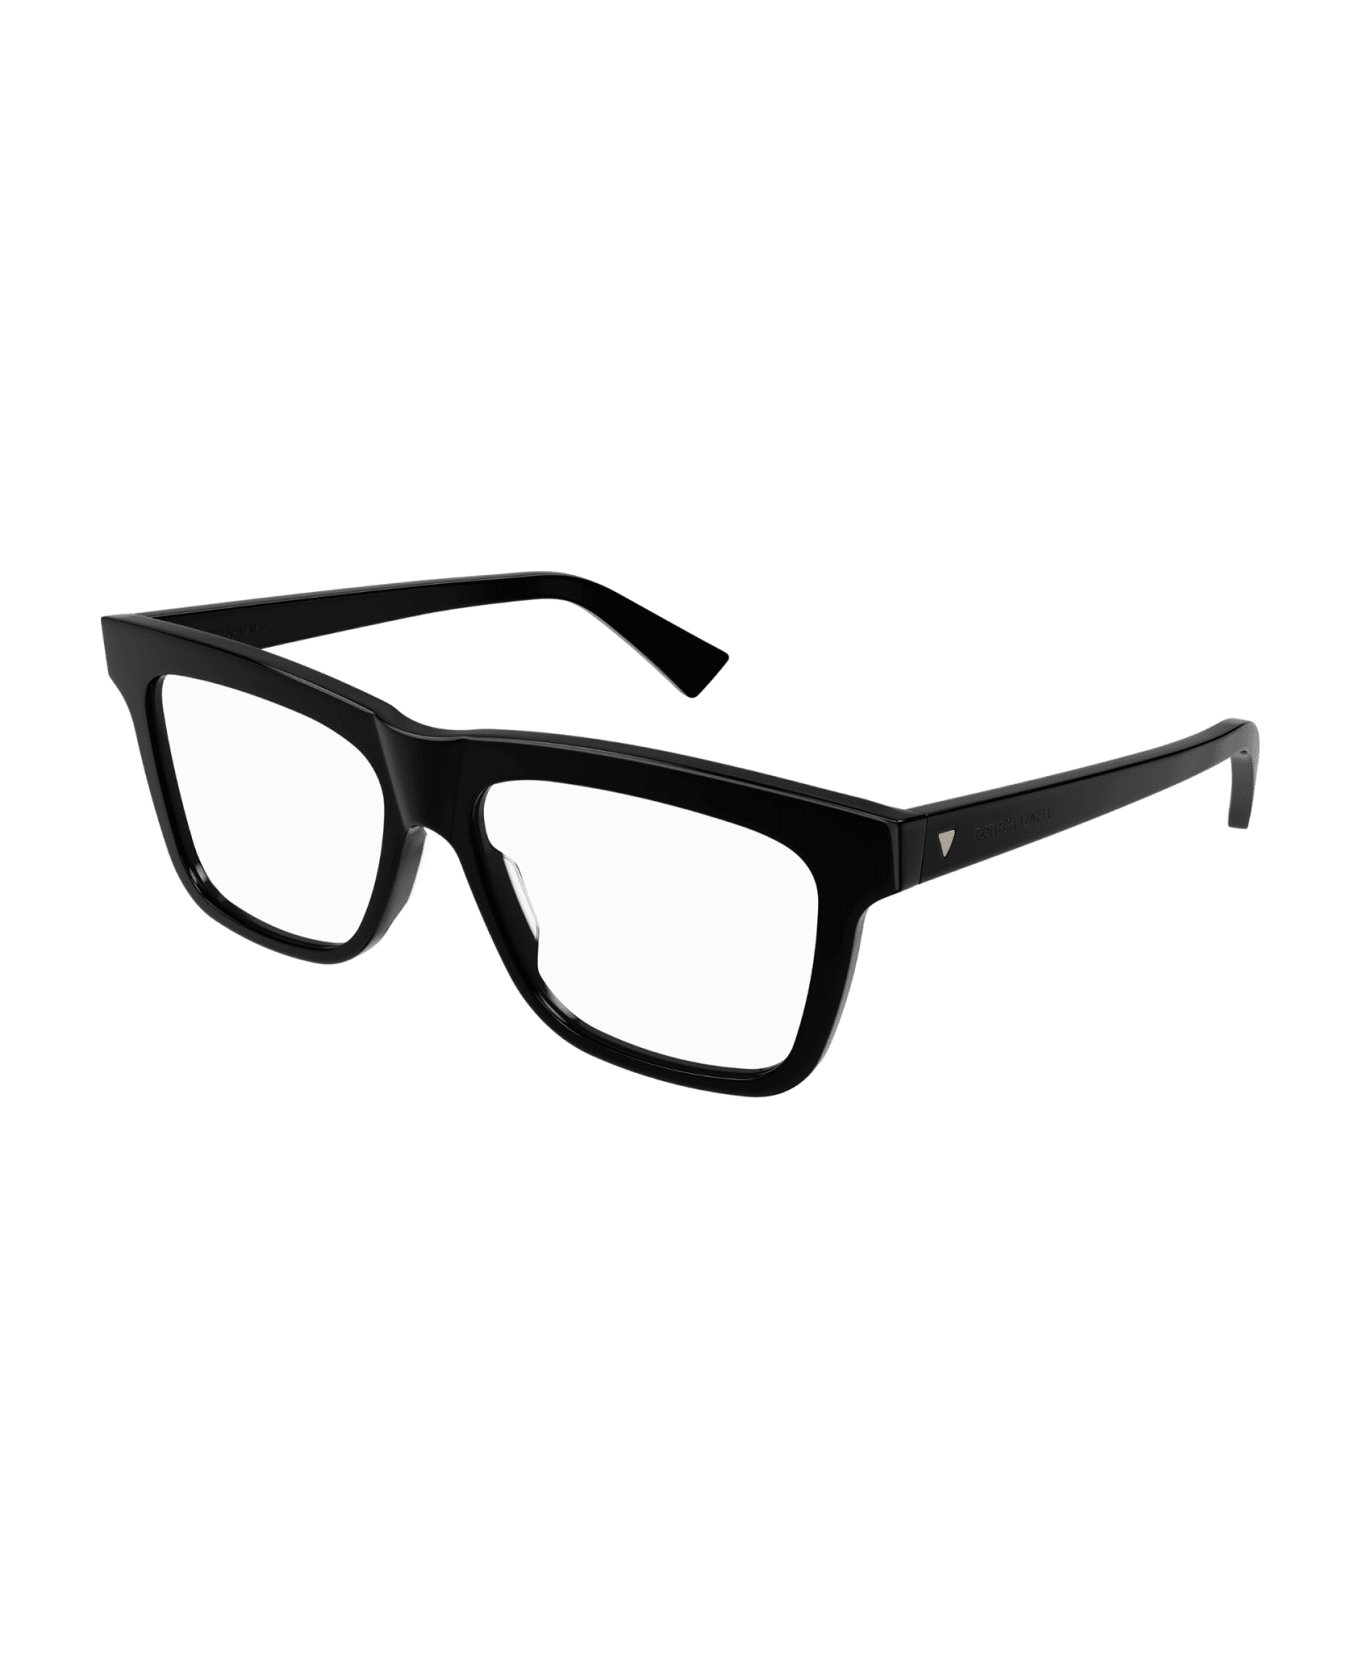 Bottega Veneta Eyewear 1faz4li0a Glasses - 001 black black transpare